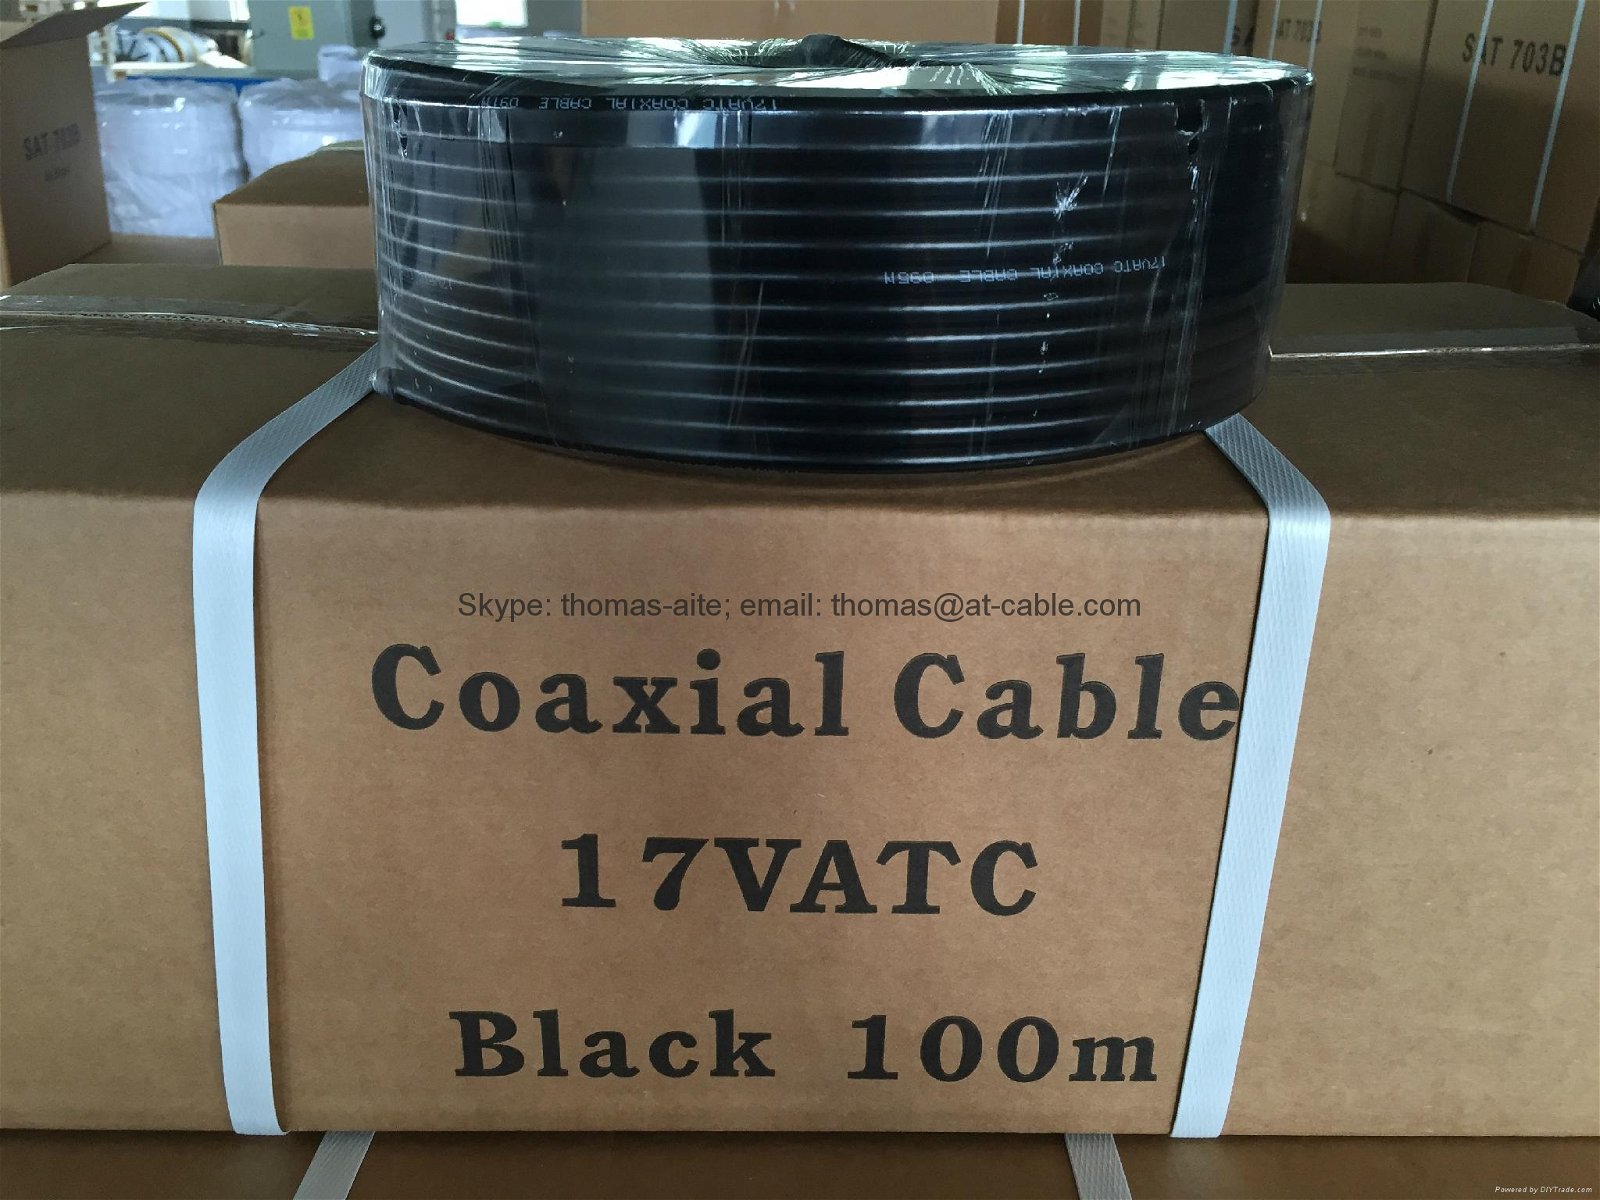 Coaxial cable 17VATC Black 100m